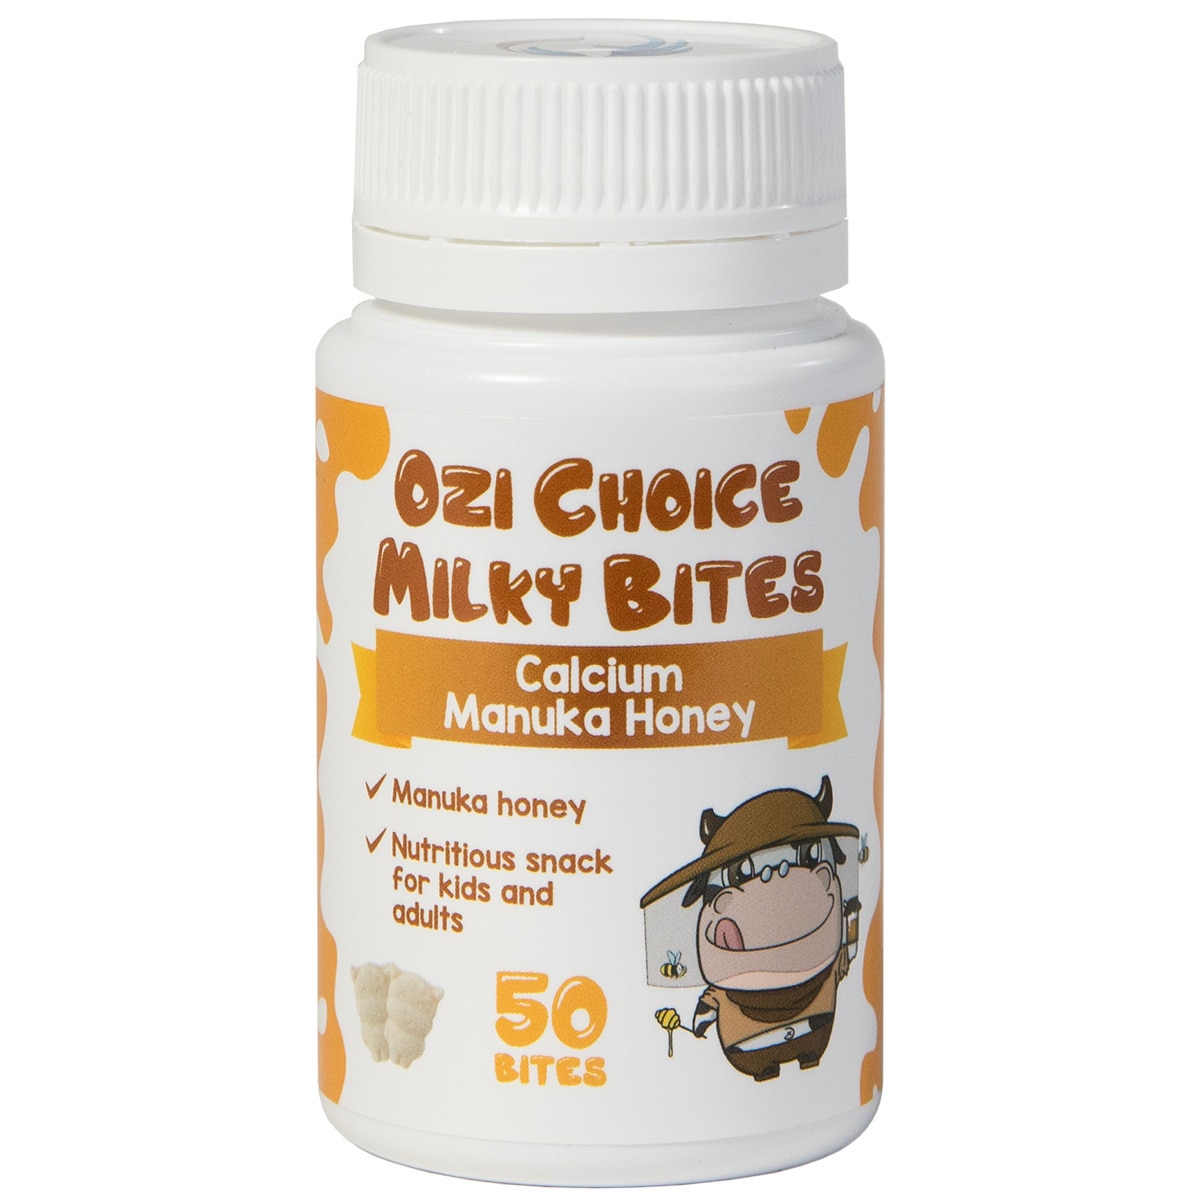 Ozi Choice Milky Bites - Manuka Honey